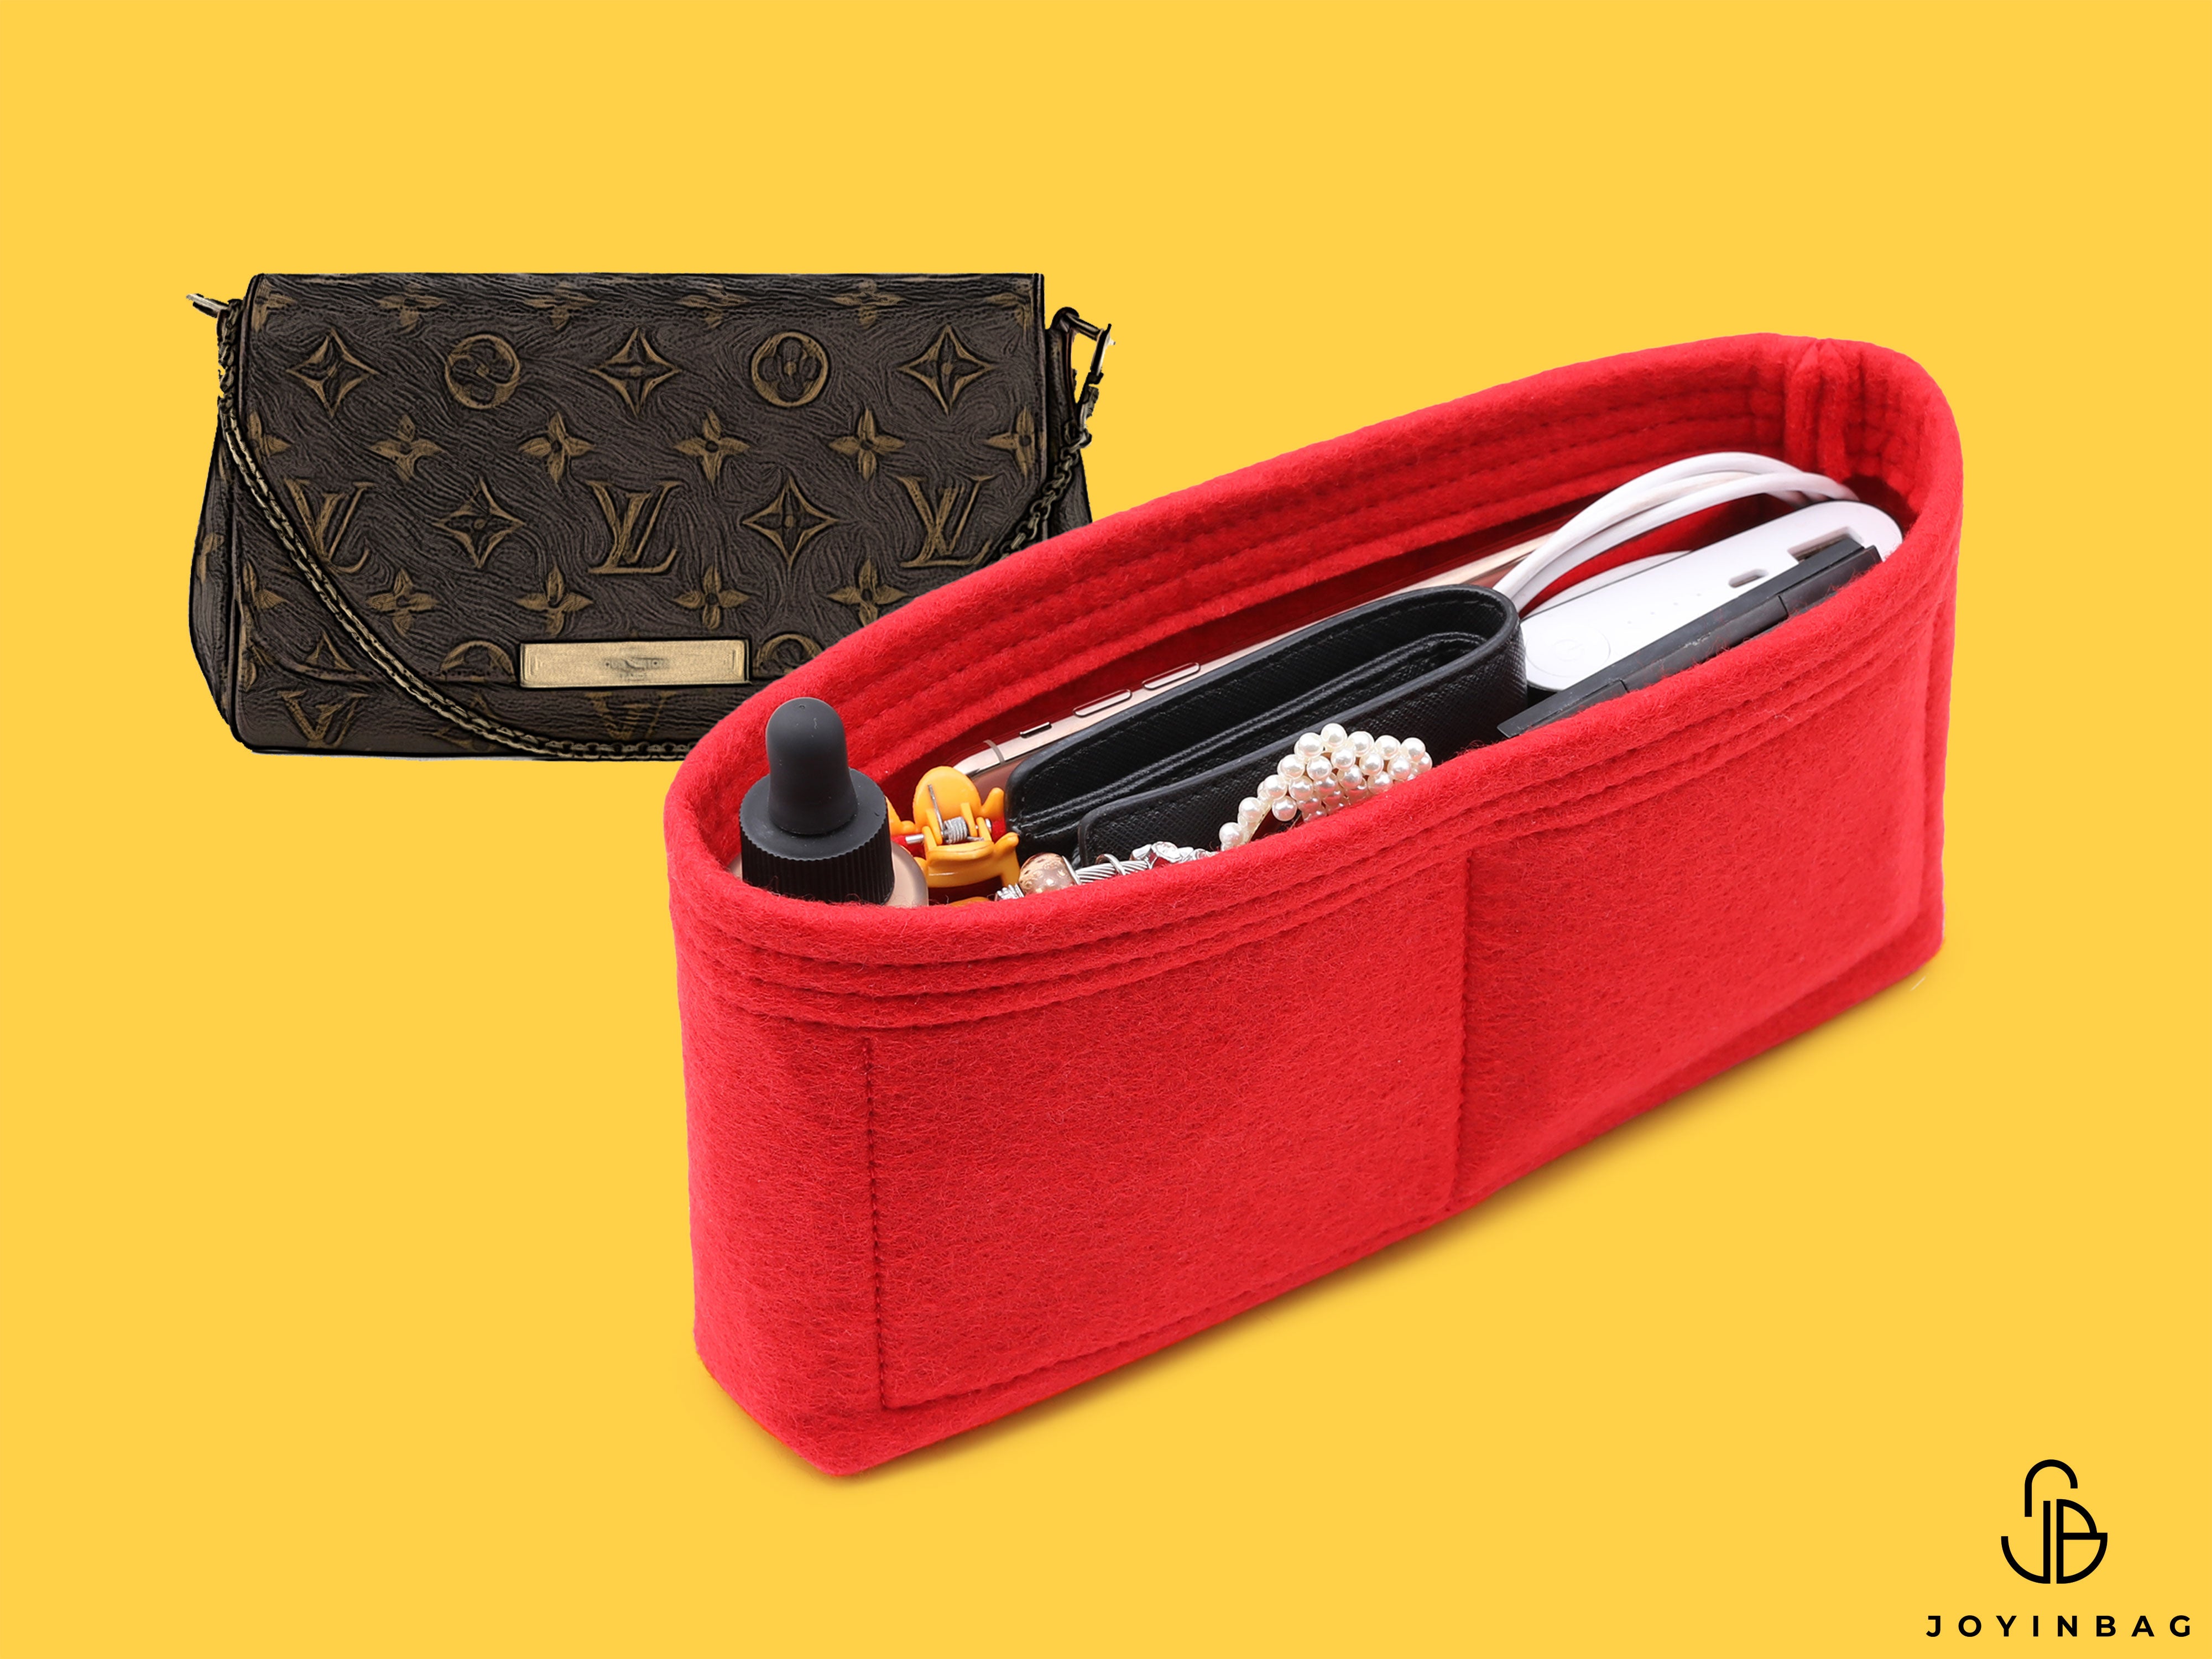  NC L.V. Favorite Bag Insert,L.V. Favorite organizer,L.V.  Favorite PM/MM/GM insert (MM, Red) : Clothing, Shoes & Jewelry